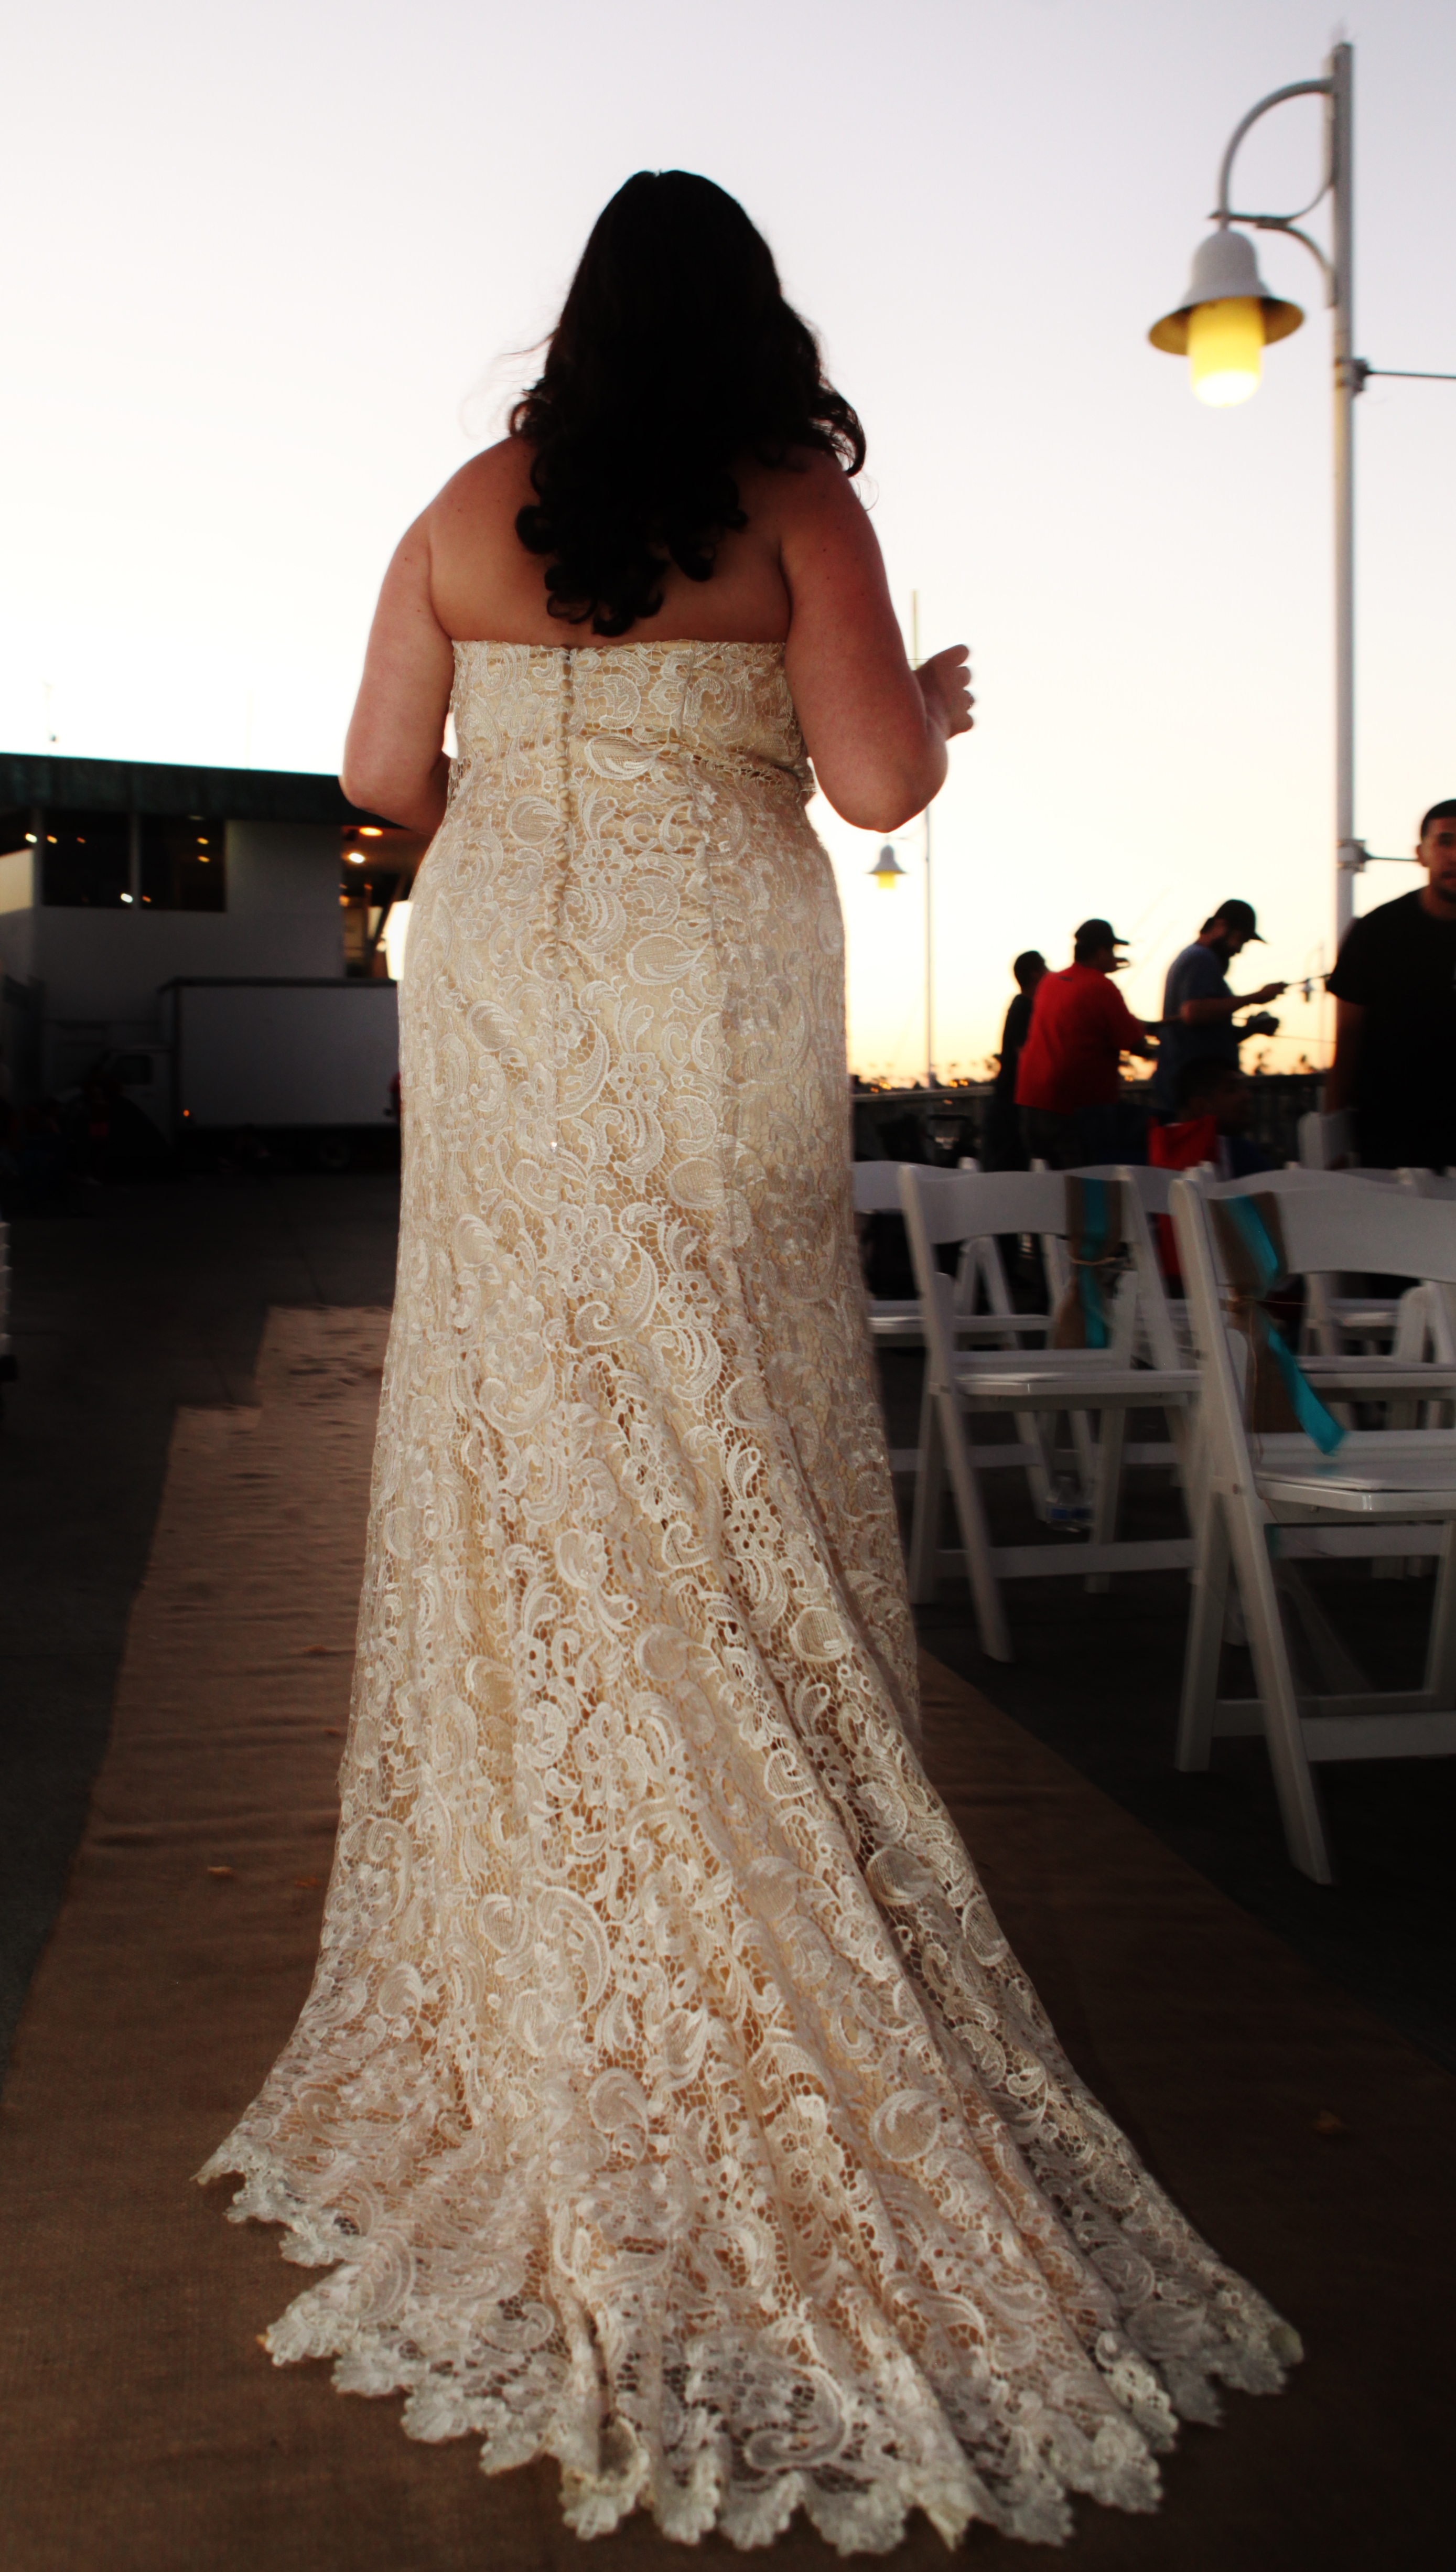 https://strutbridalsalon.com/wp-content/uploads/2015/02/wedding-dress-plus-size-champagne.jpg